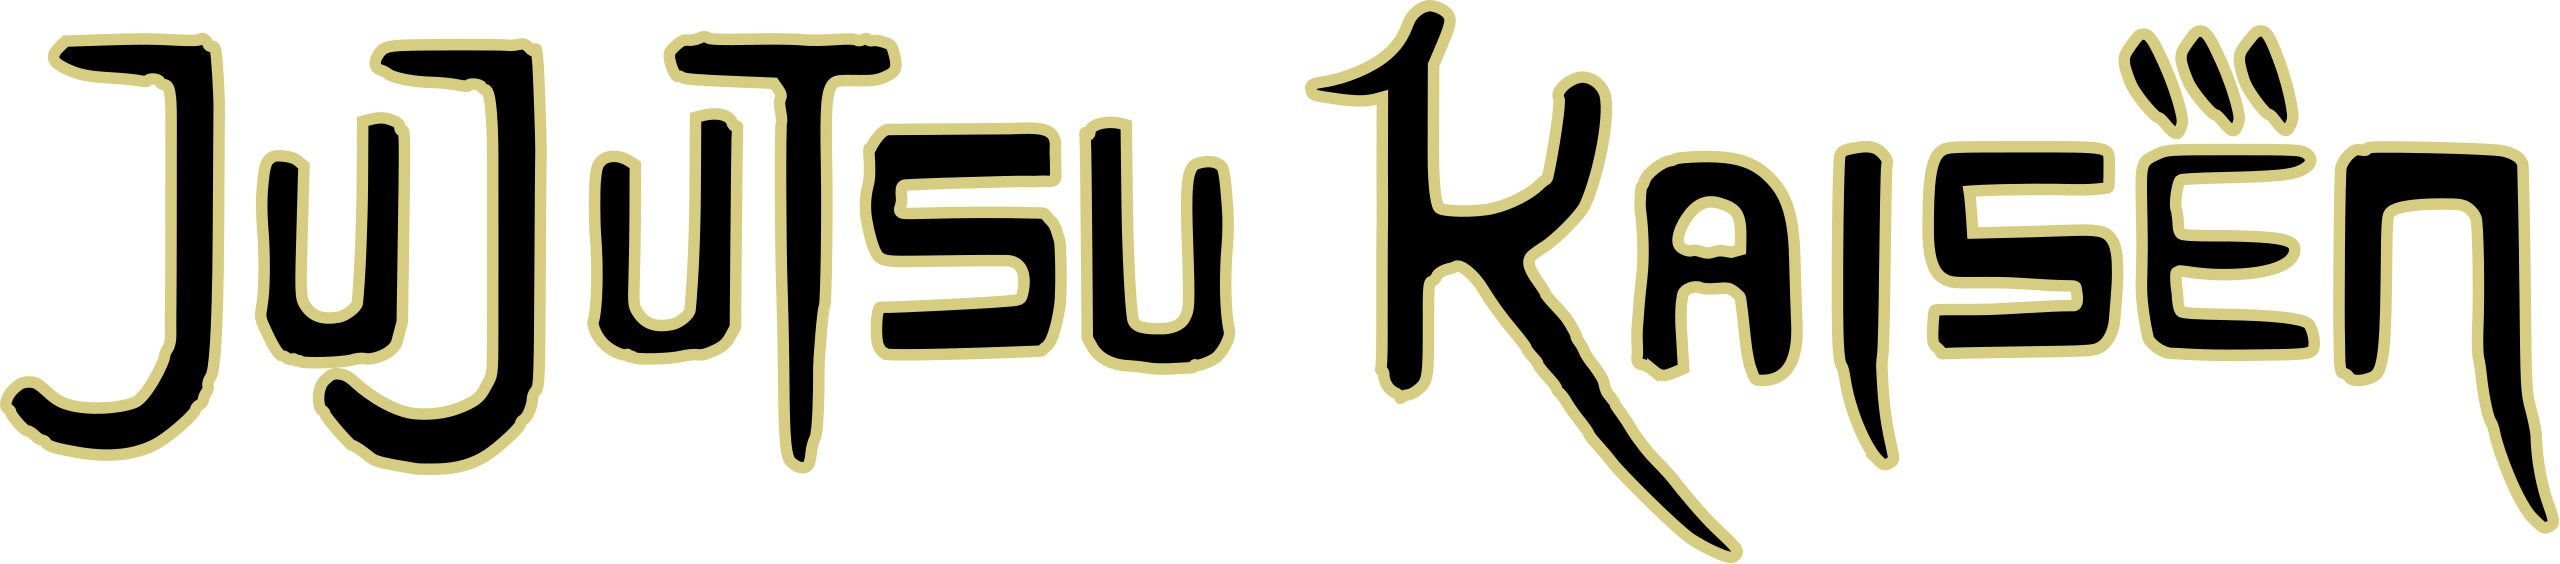 Jujutsu Kaisen Logo PNG Photos